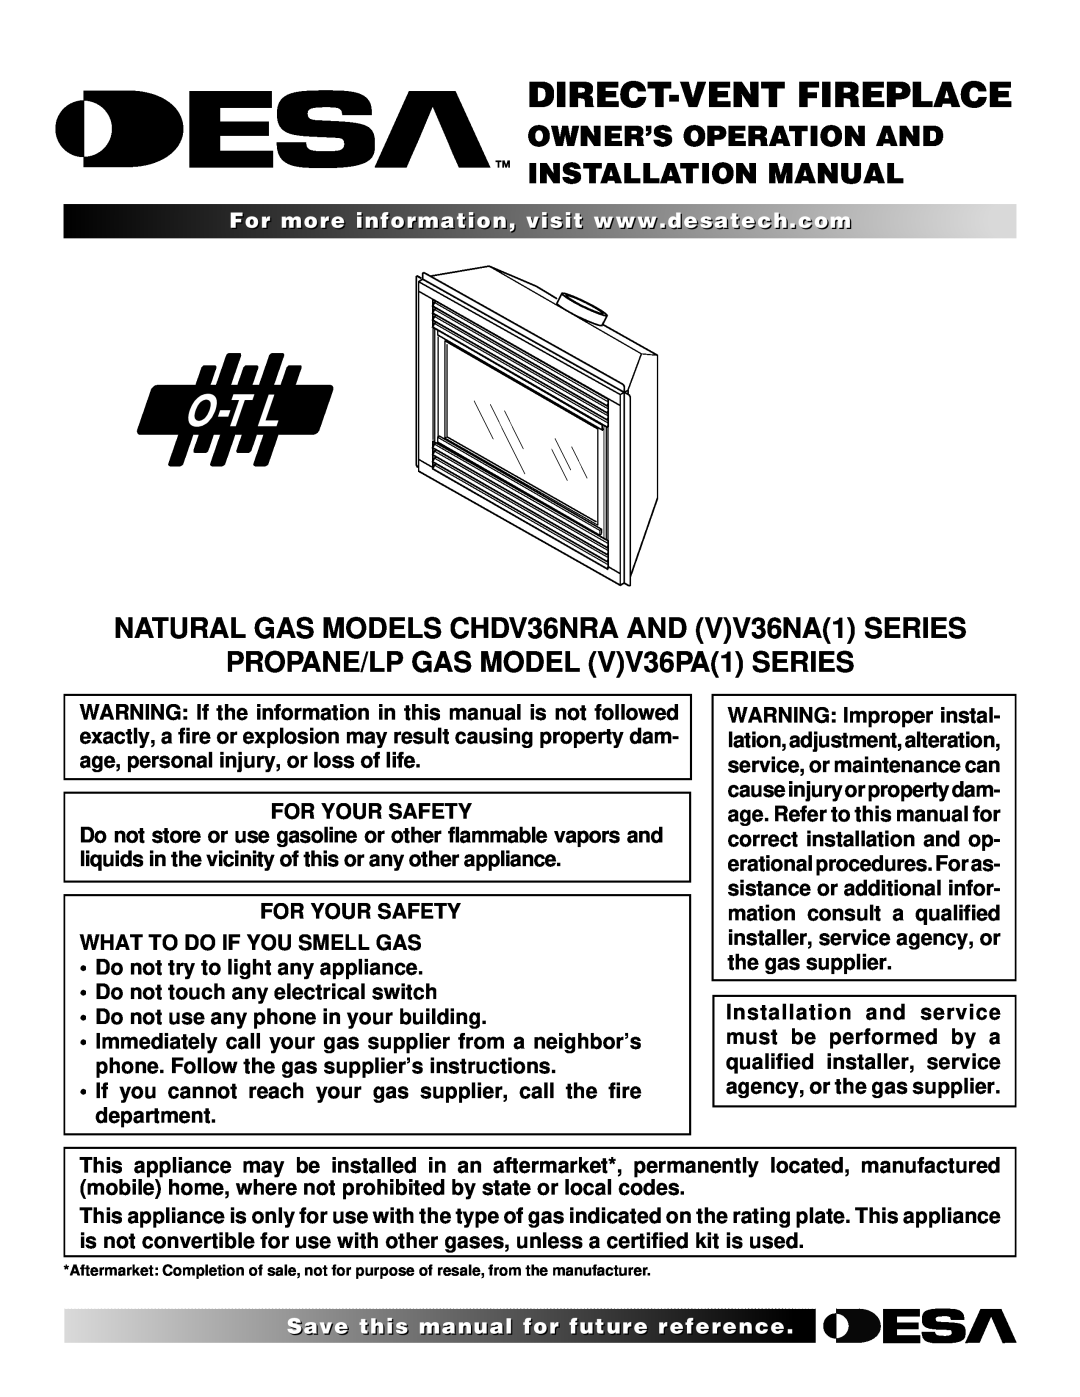 Desa CHDV36NRA installation manual Owner’S Operation And Installation Manual, PROPANE/LP GAS MODEL VV36PA1 SERIES 